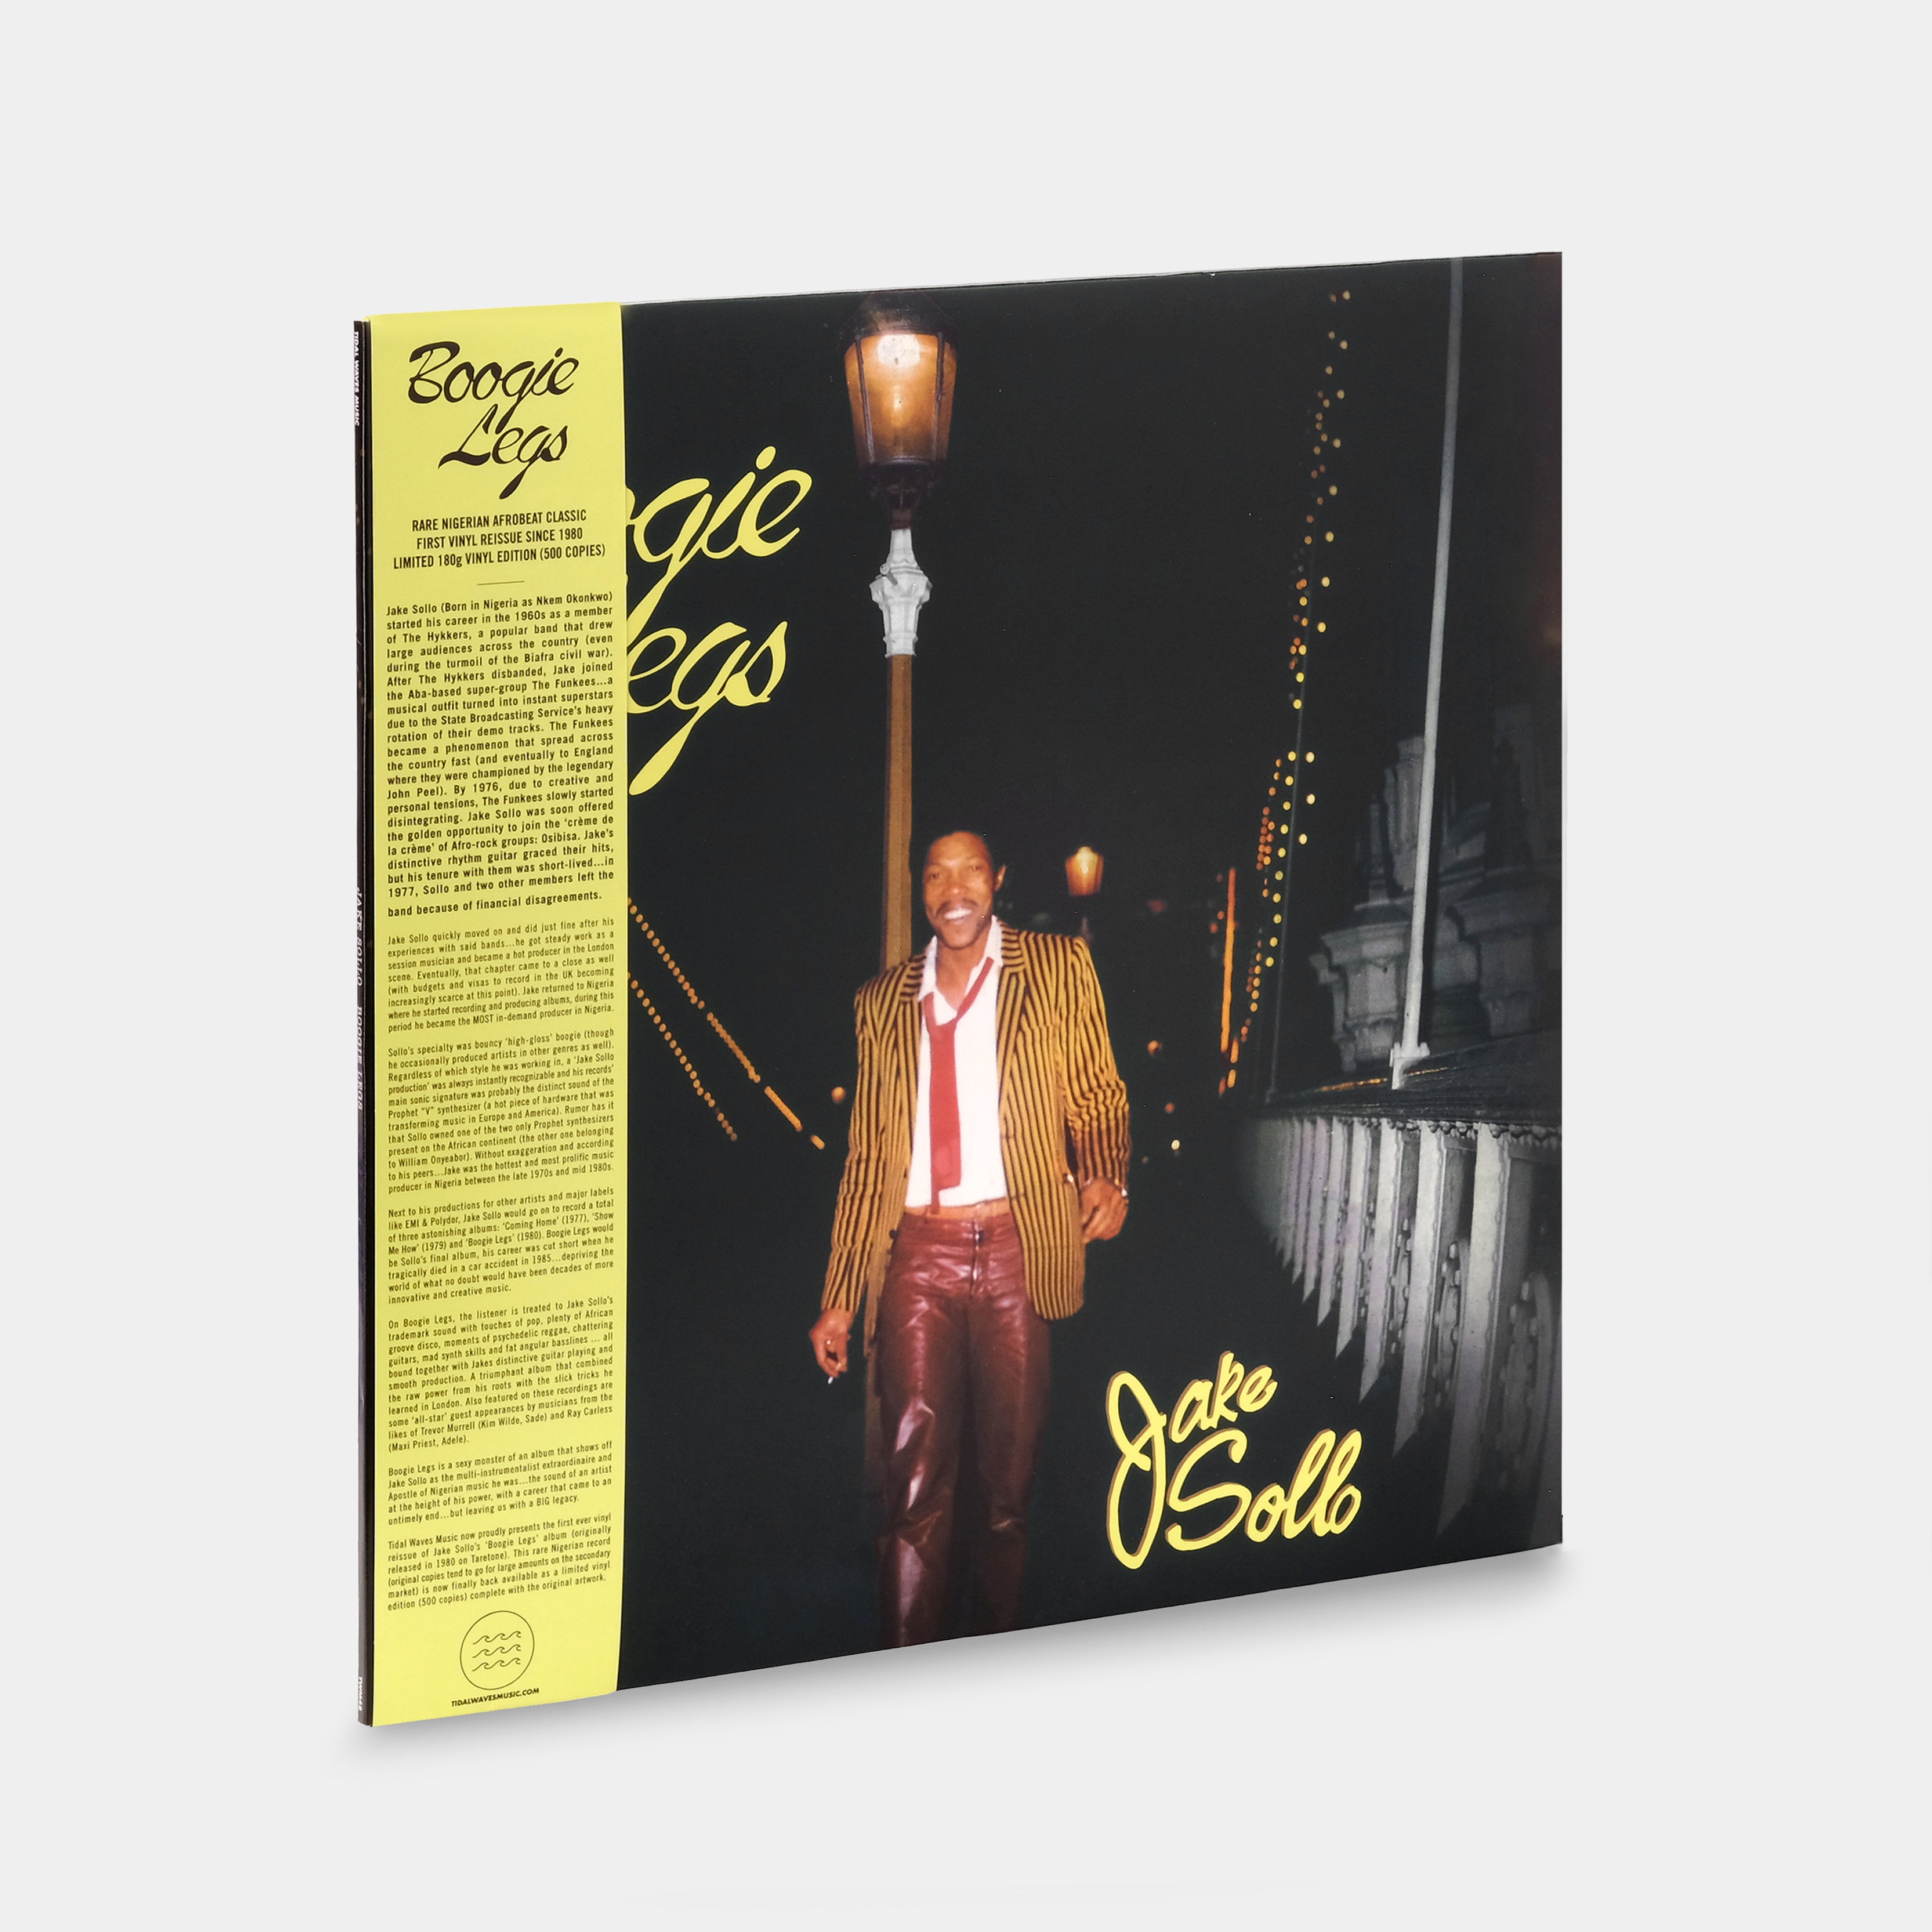 Jake Sollo - Boogie Legs LP Vinyl Record